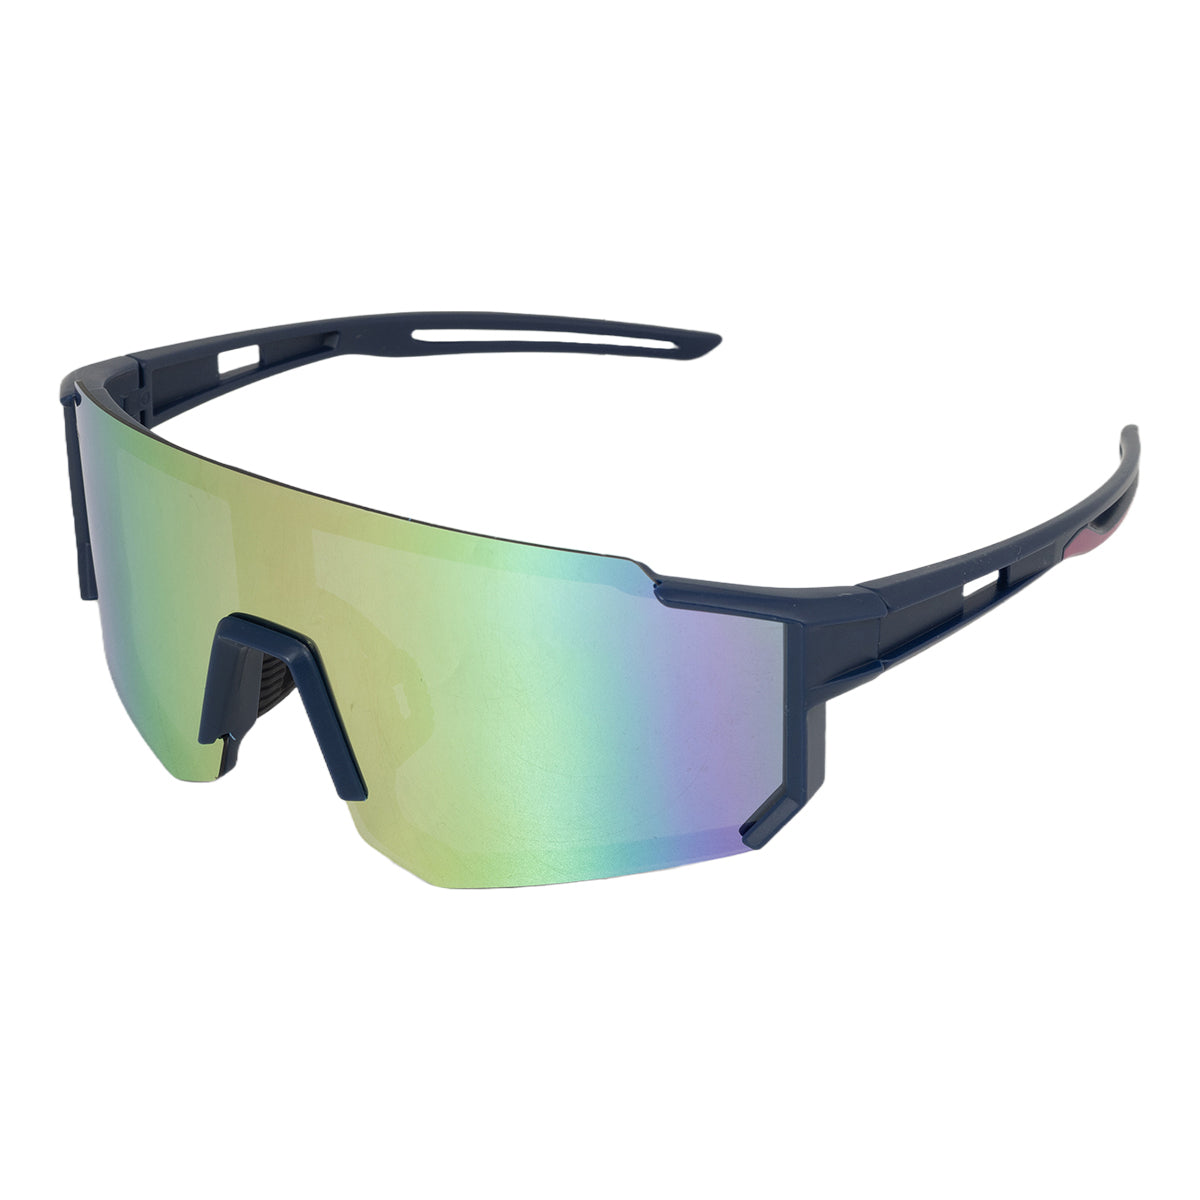 Retron Active Sunglasses (Polarized Protection)